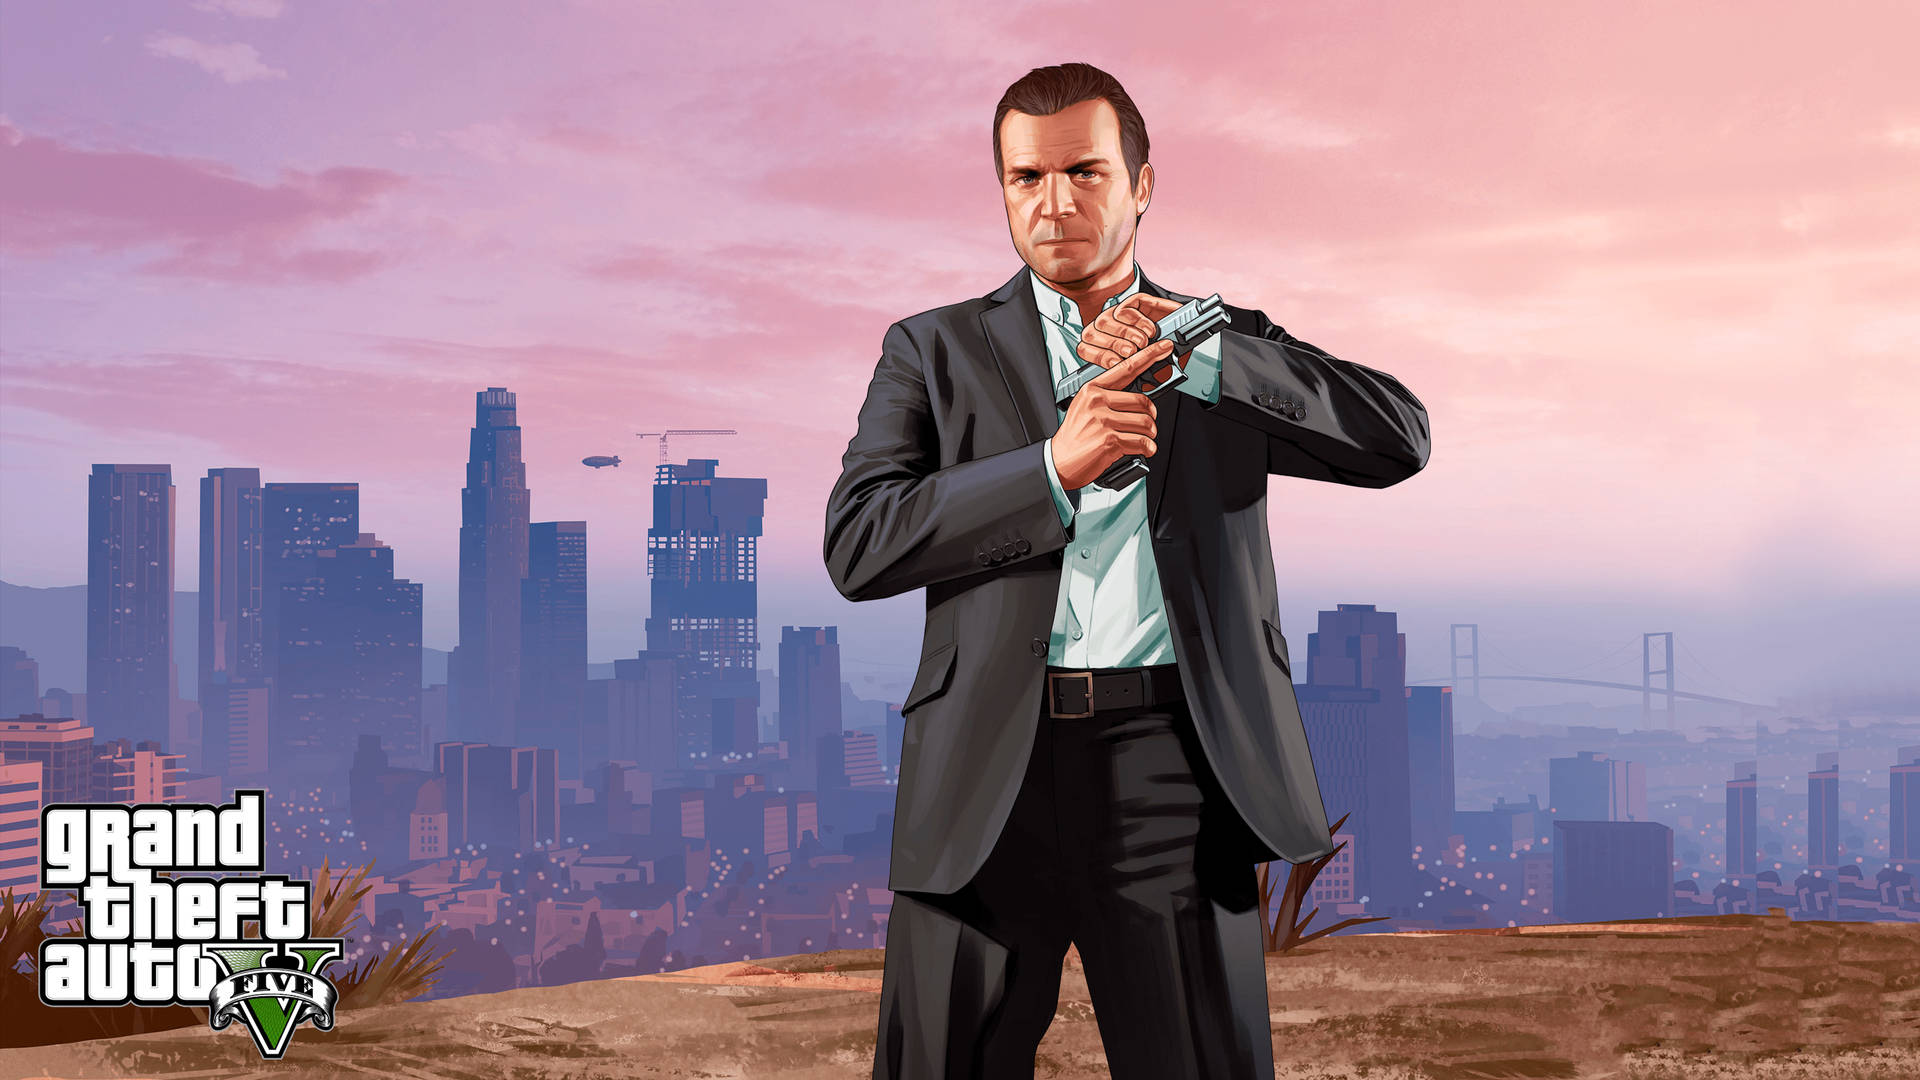 Grand Theft Auto 5 på iPhone Wallpaper